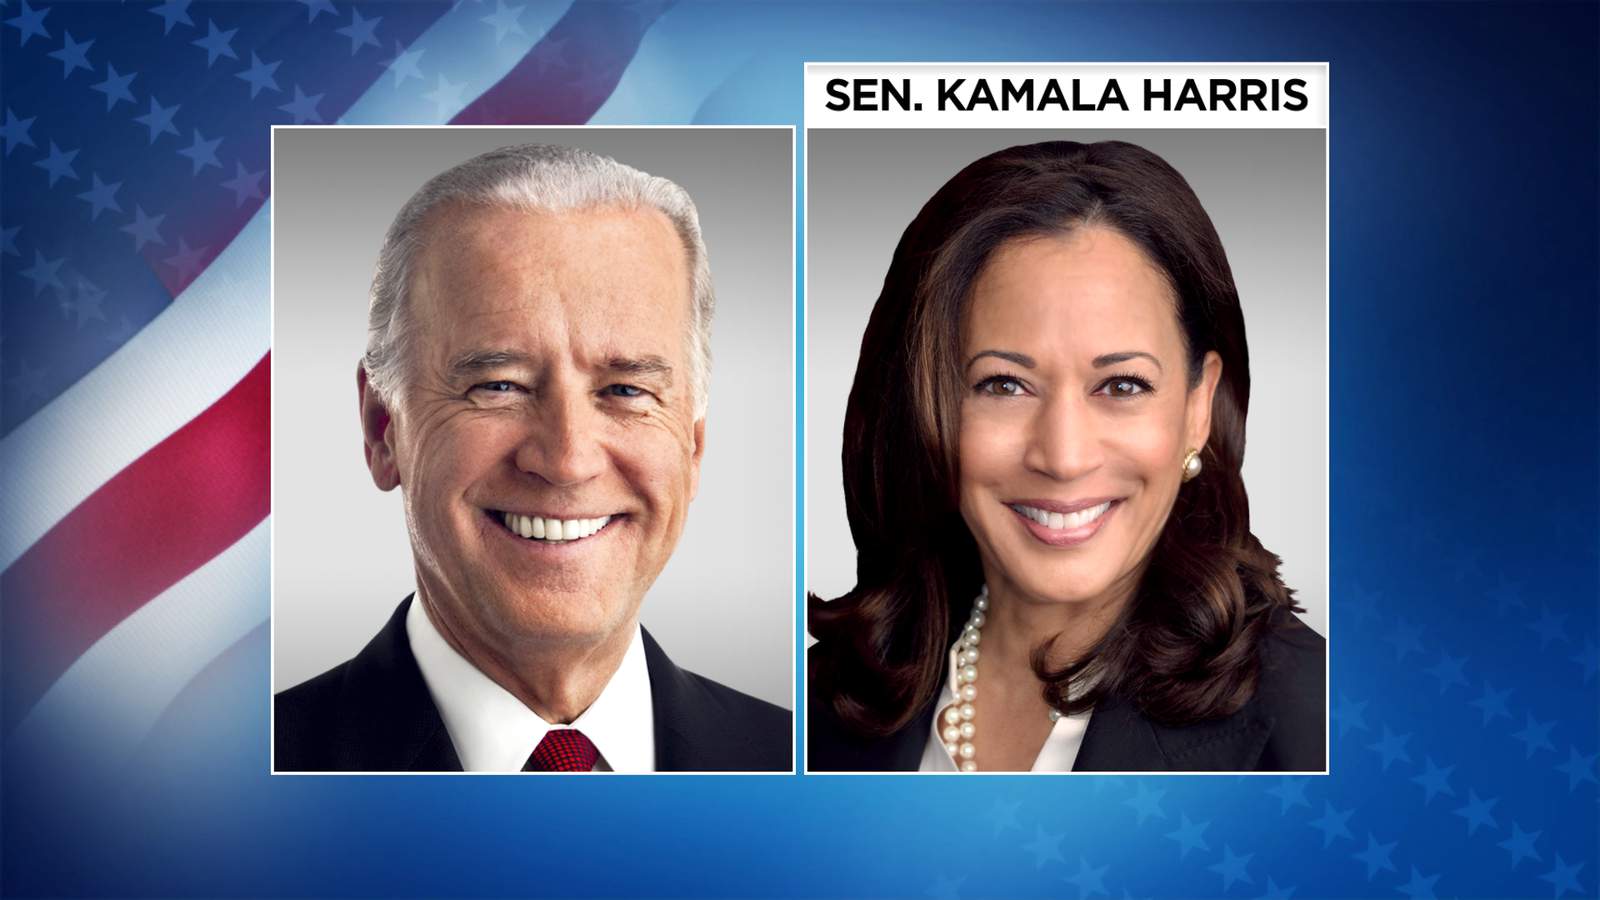 Joe Biden picks California Sen. Kamala Harris as 2020 running mate in historic move